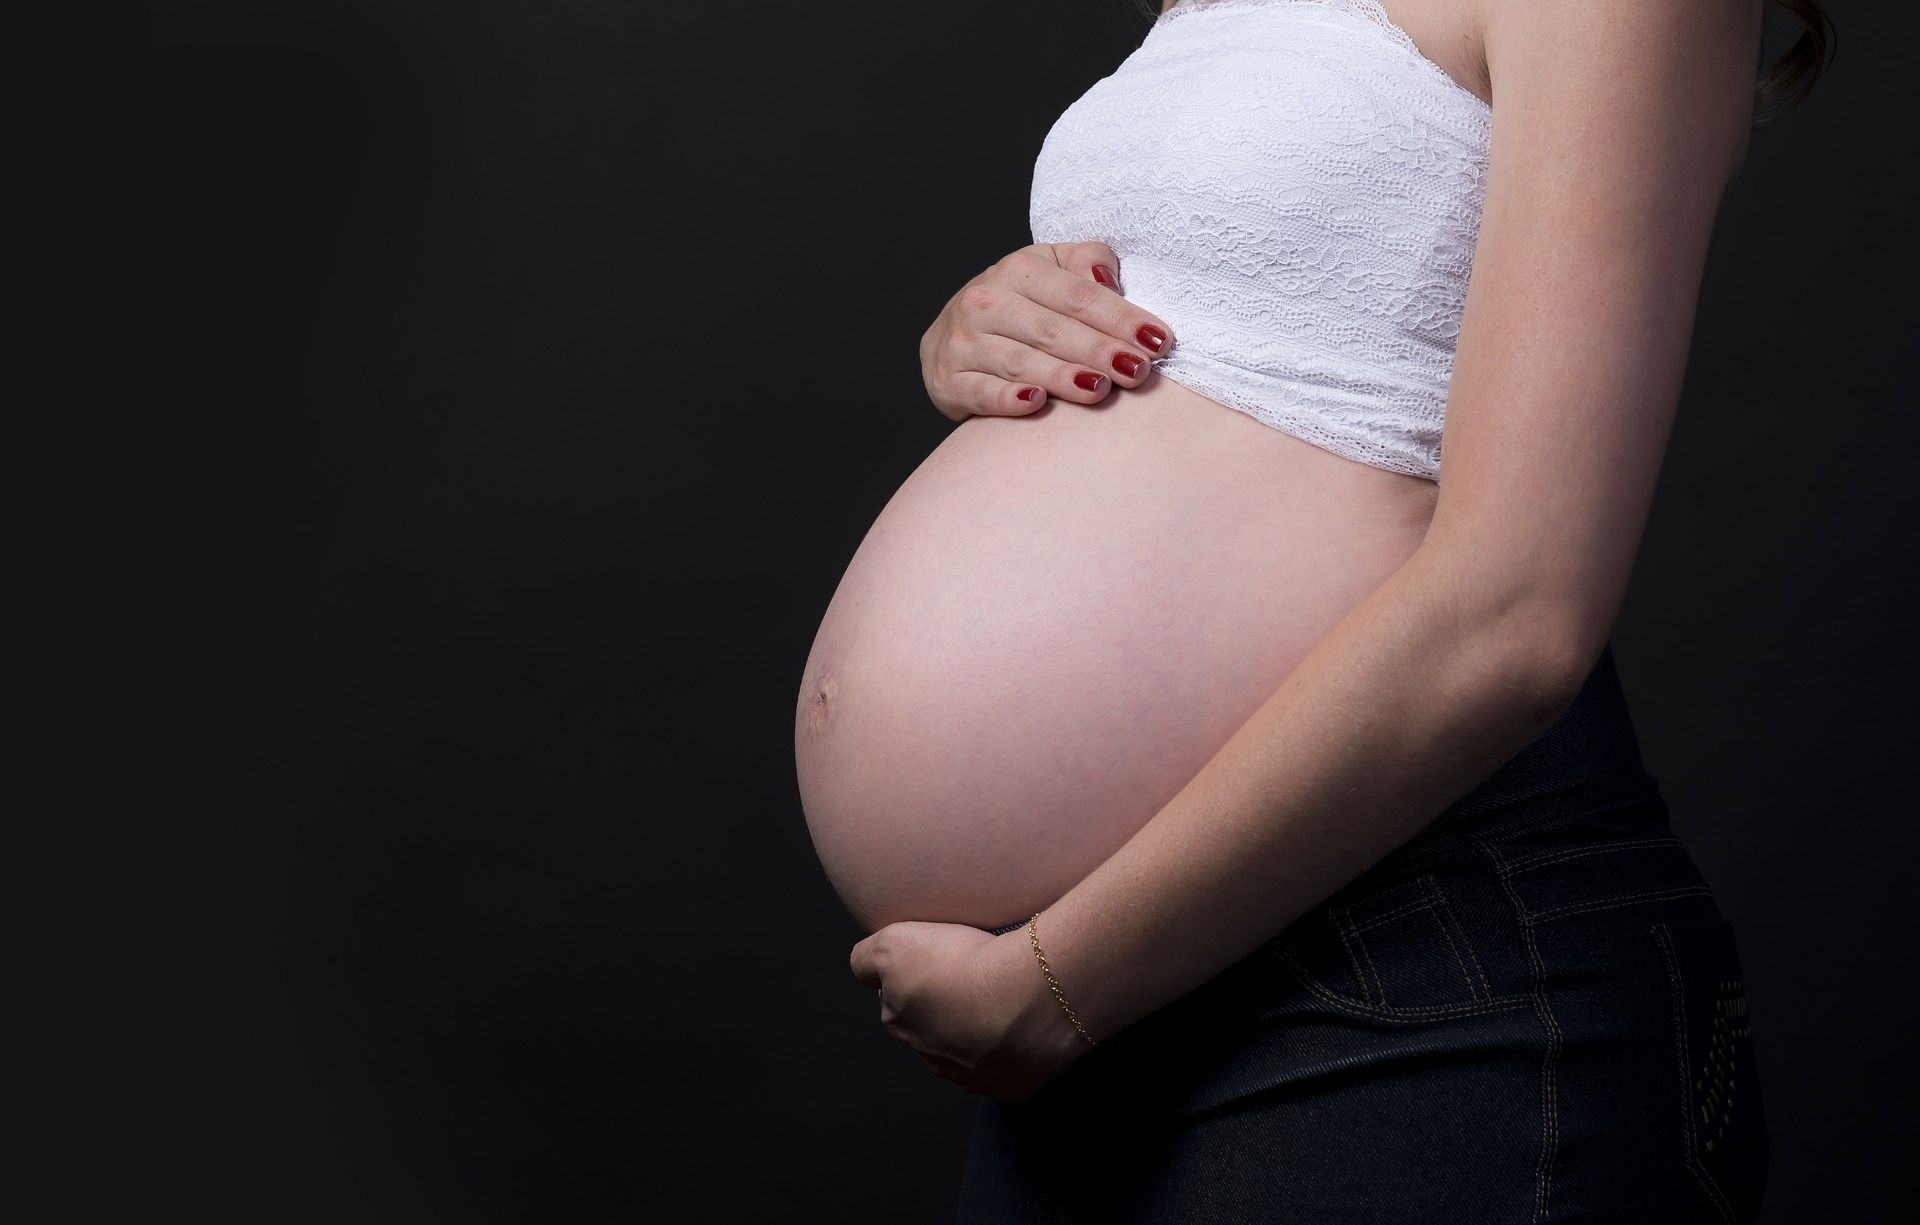 Mujer embarazada / Pixabay